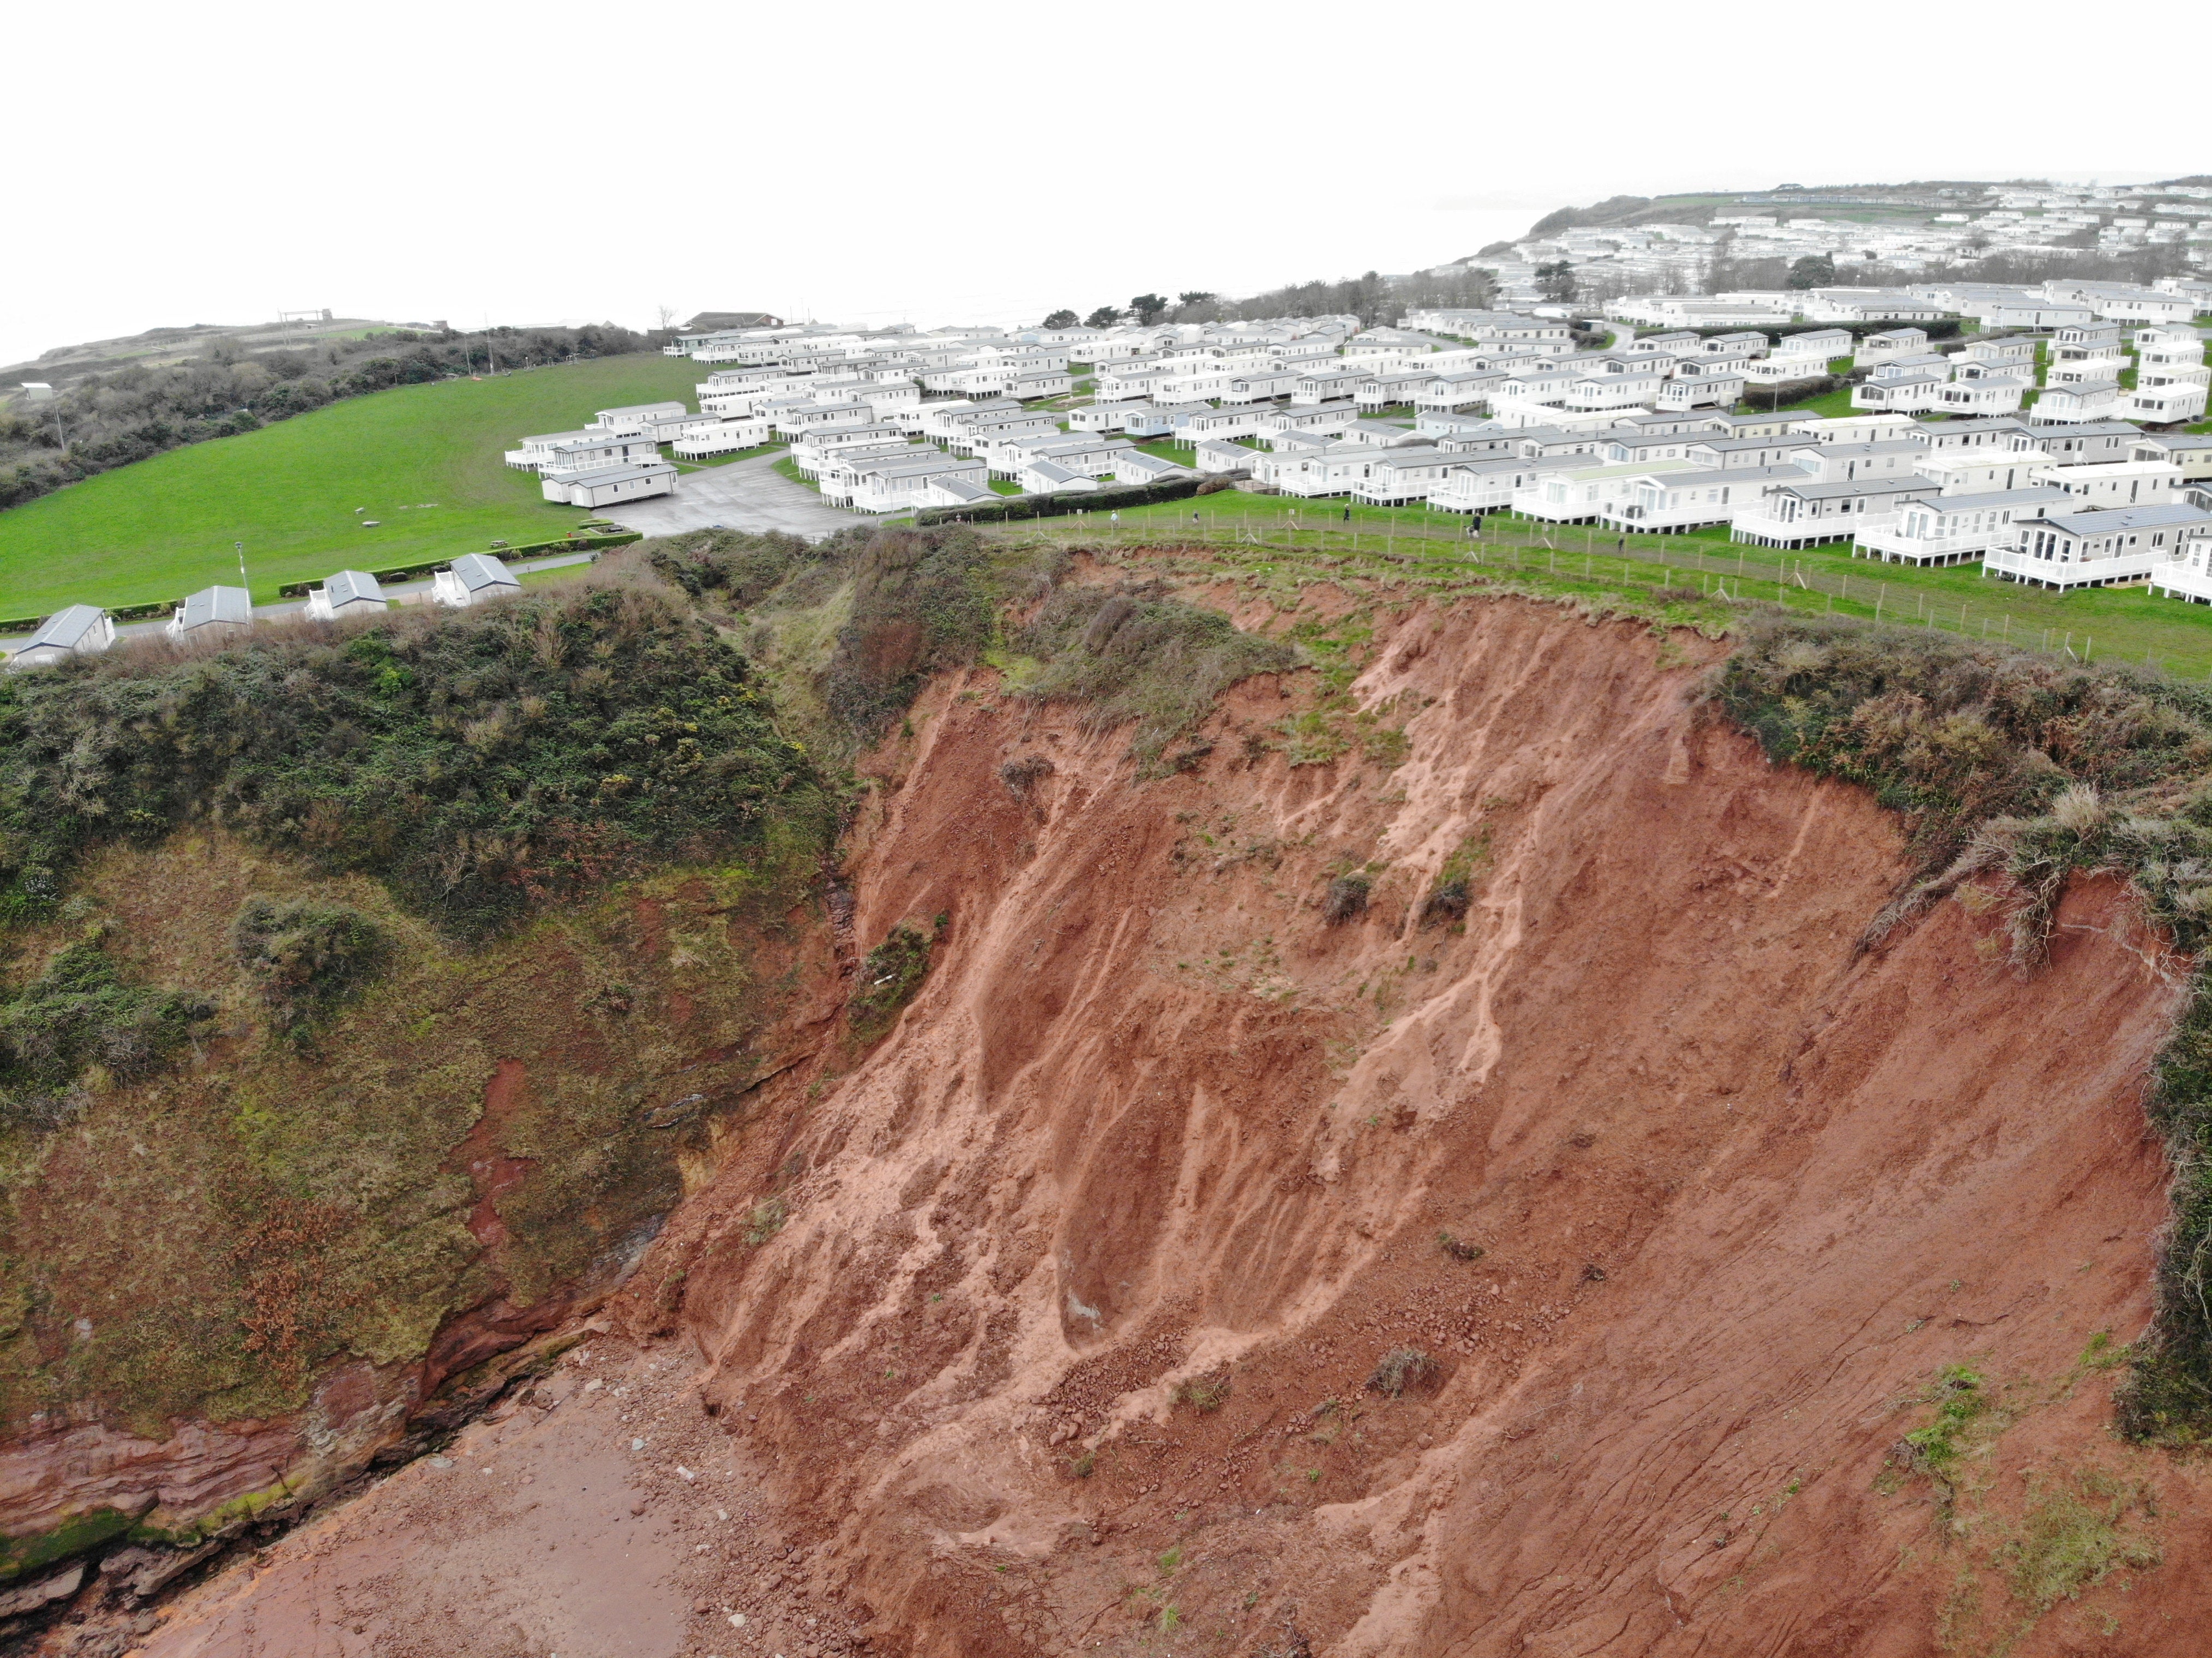 Serious coastal erosion near Sandy Bay caravan park near Exmouth, capturing the extent of East Devon’s cliff falls